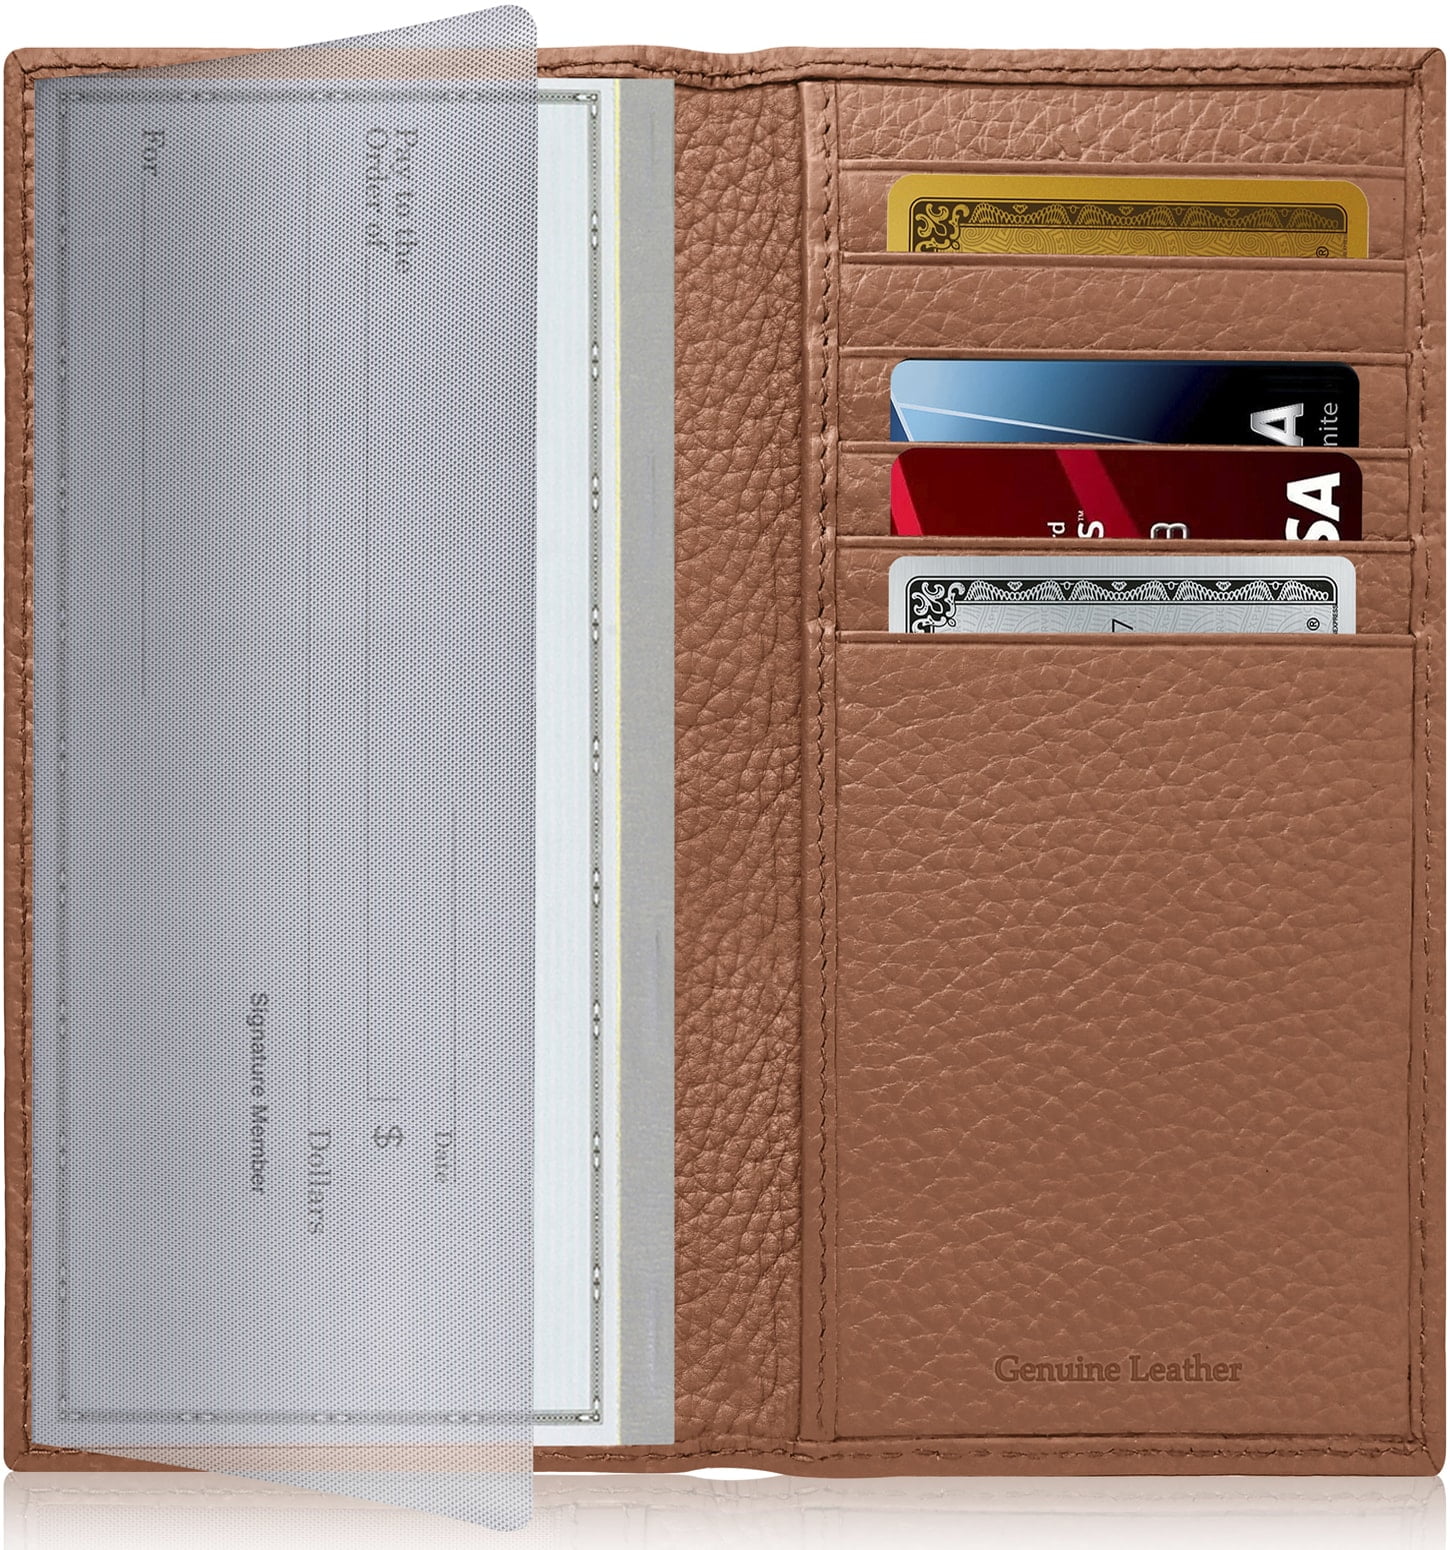 Leather Checkbook Cover For Men & Women Checkbook Registers RFID Blocking checkbook wallet